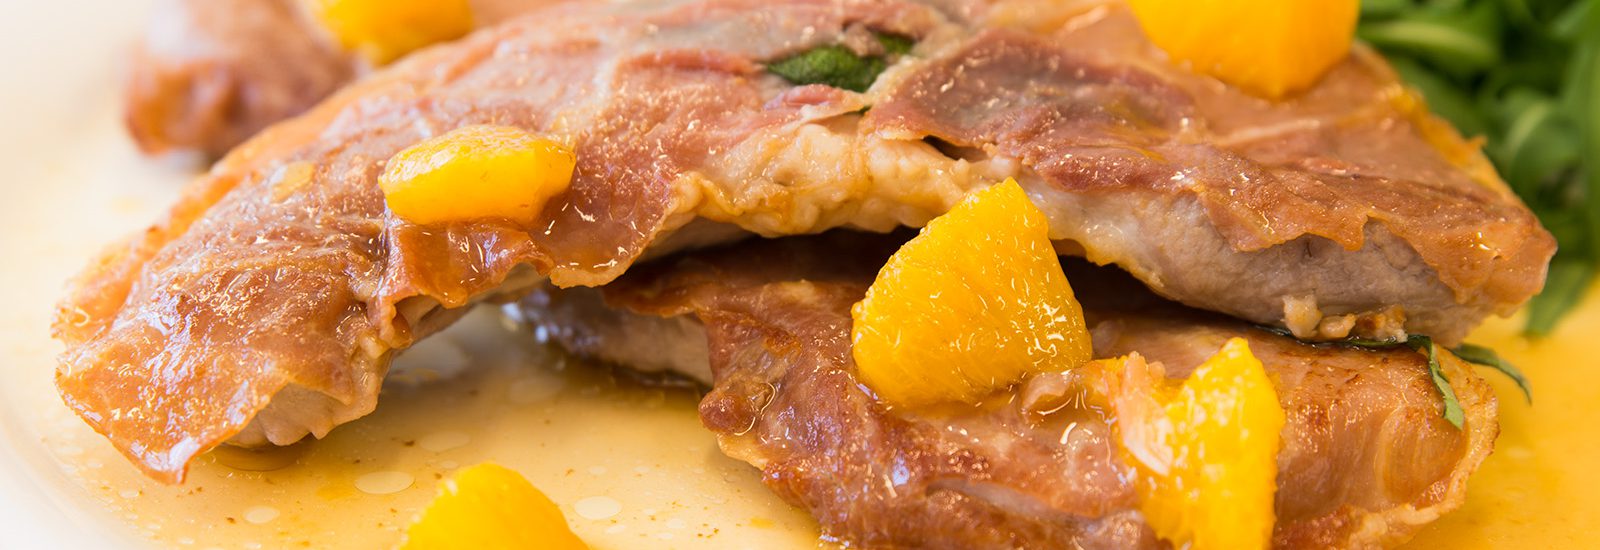 Pork with Prosciutto, sage and Orange_1